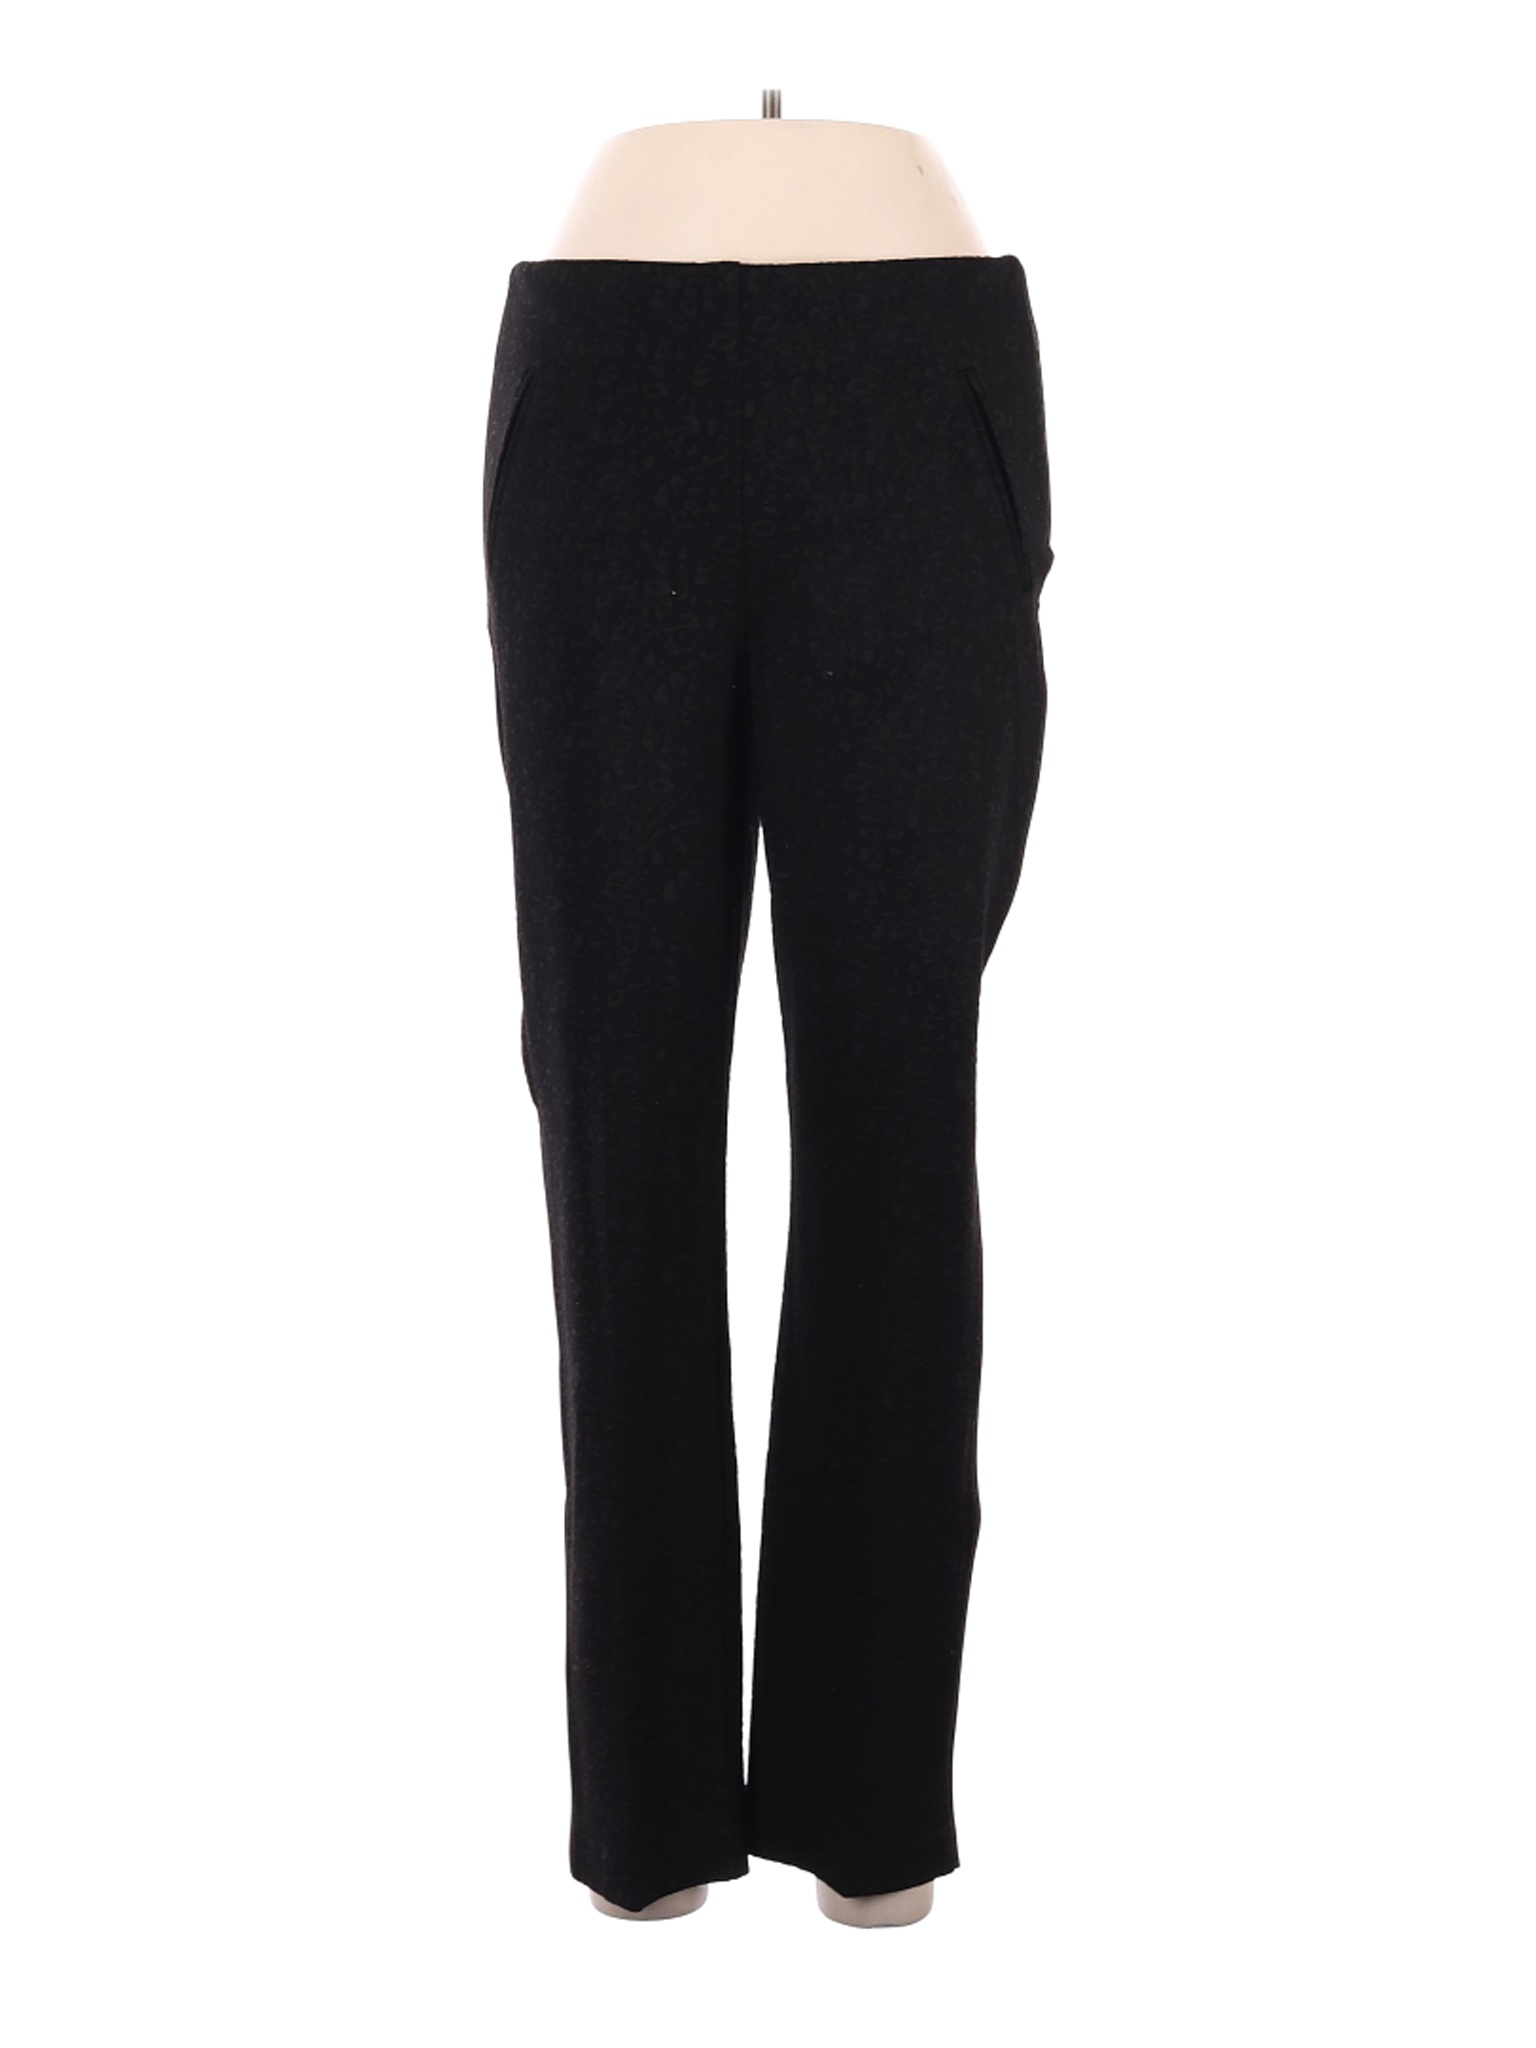 Chico's Women Black Dress Pants M | eBay